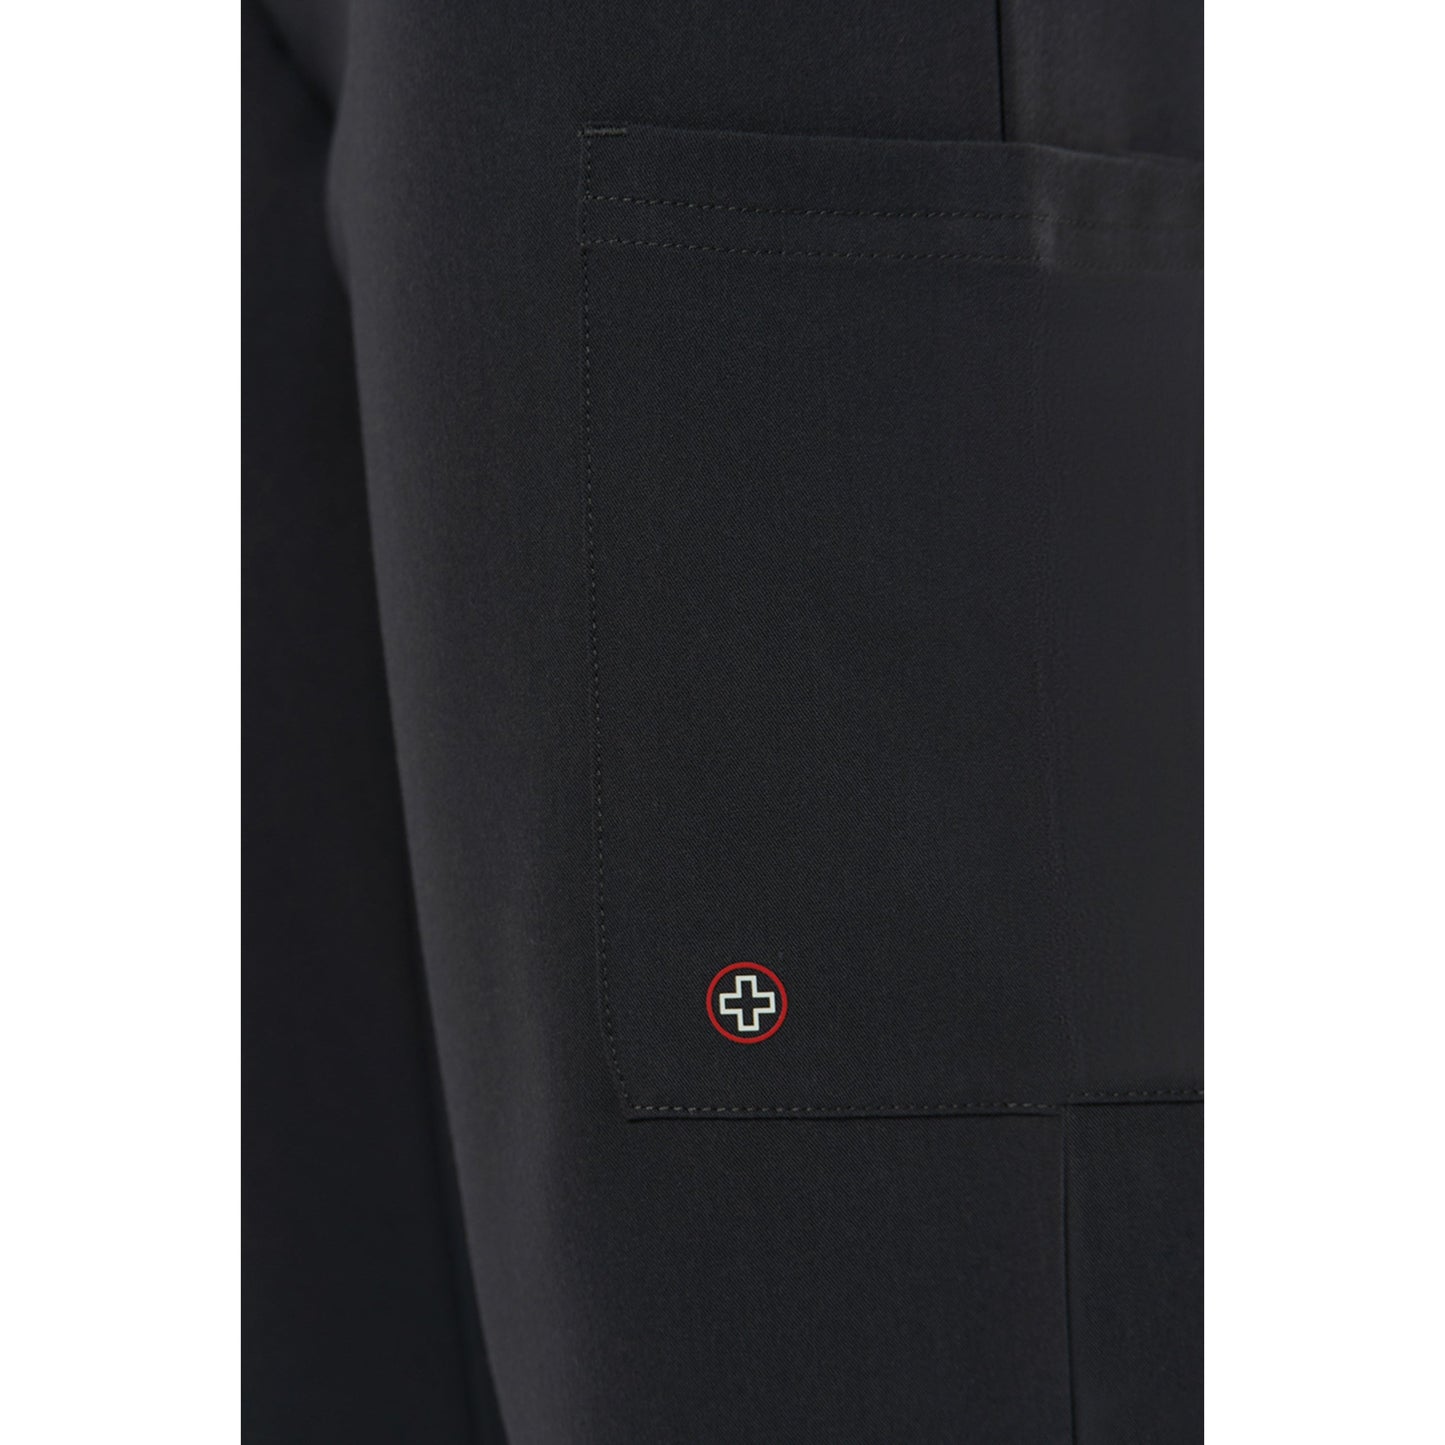 V-TESS Slim Scrub Pants 370 Reg Inseam 28 1/2'' SALE